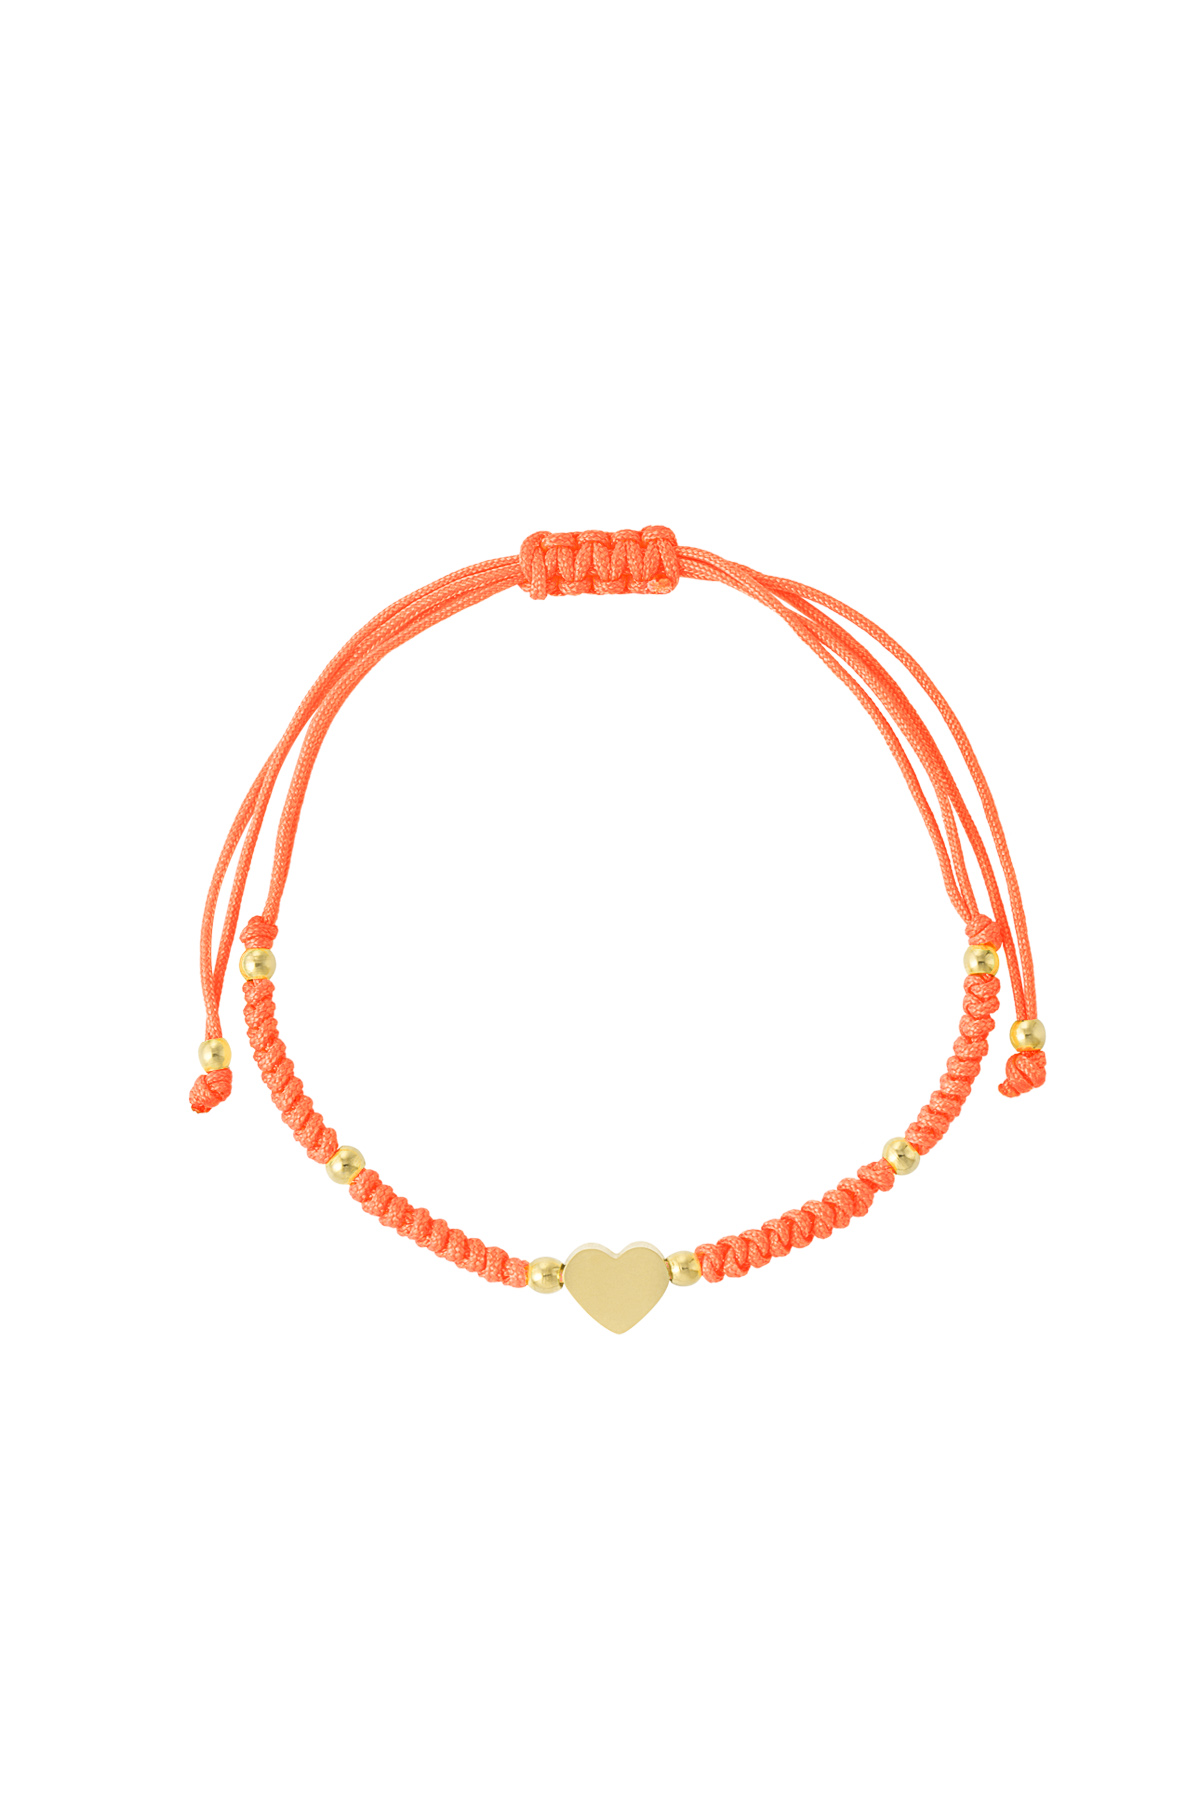 Braided bracelet with heart - orange/gold  h5 